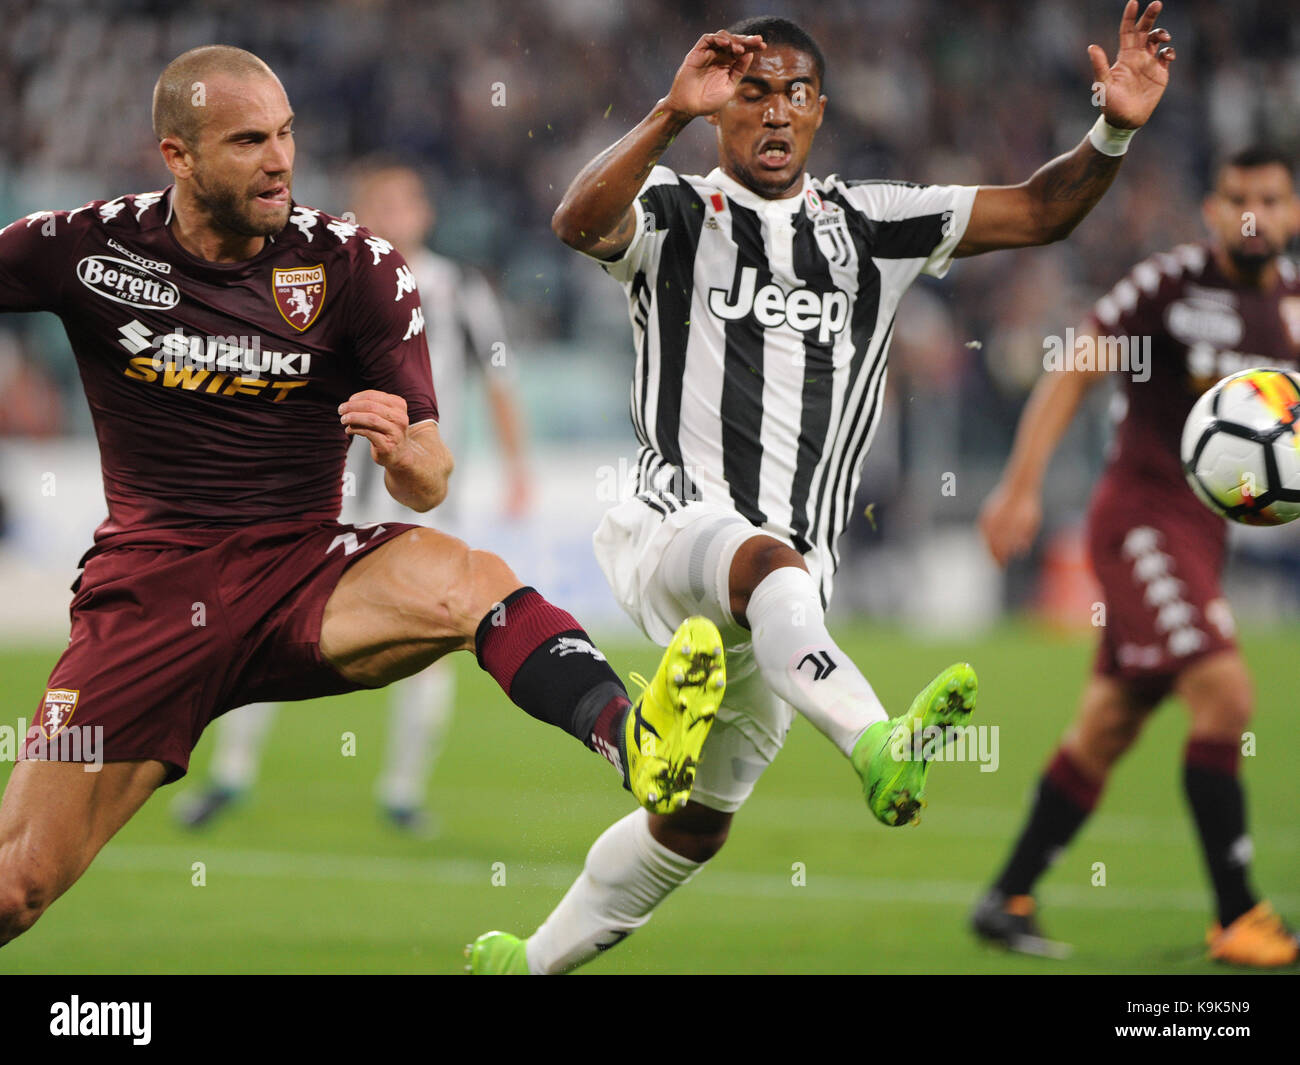 September 23, 2017 in Turin - Allianz Stadium Soccer match Juventus F.C. vs F.C. TORINO In picture:  Photo: Cronos/Claudio Benedetto Stock Photo